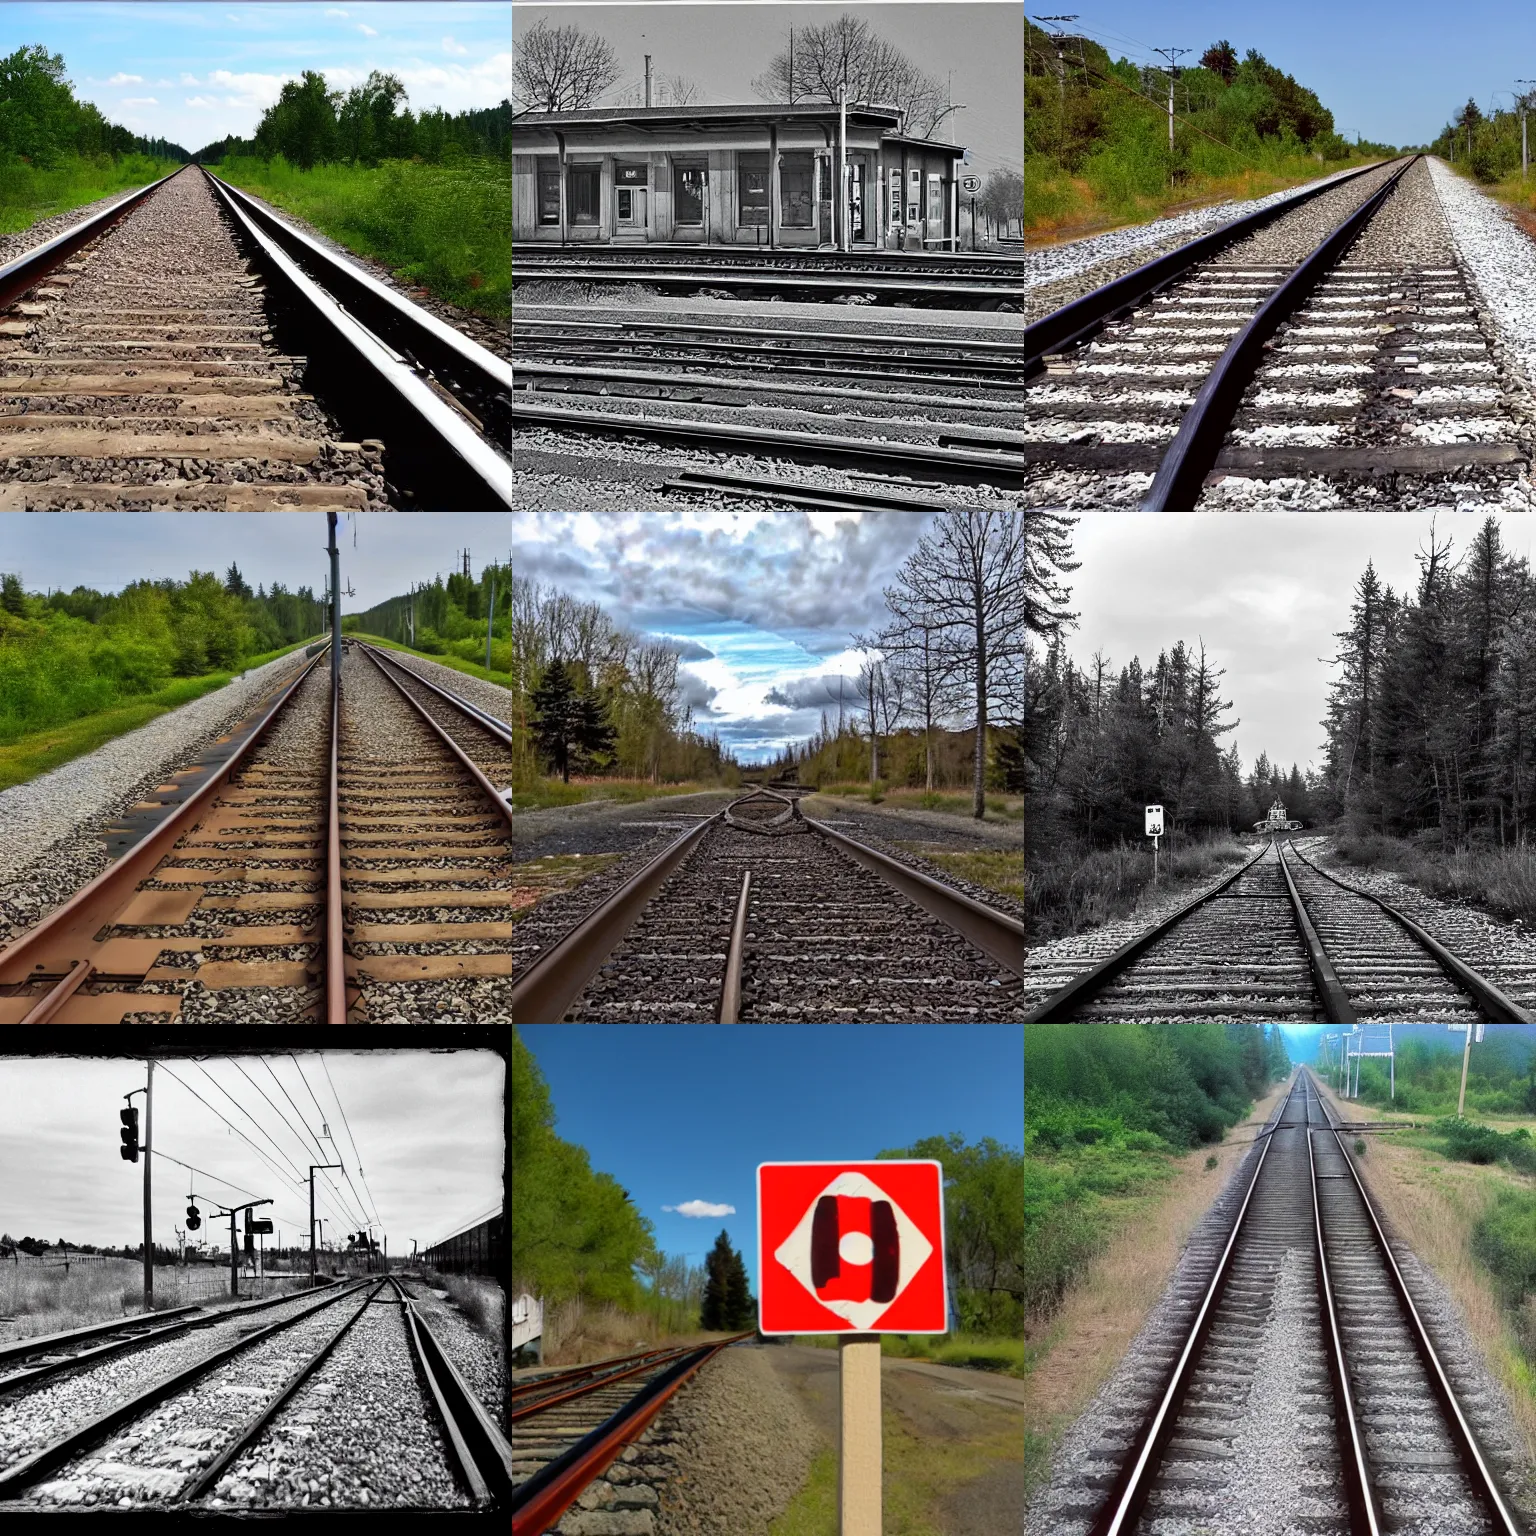 Prompt: a railroad crossing